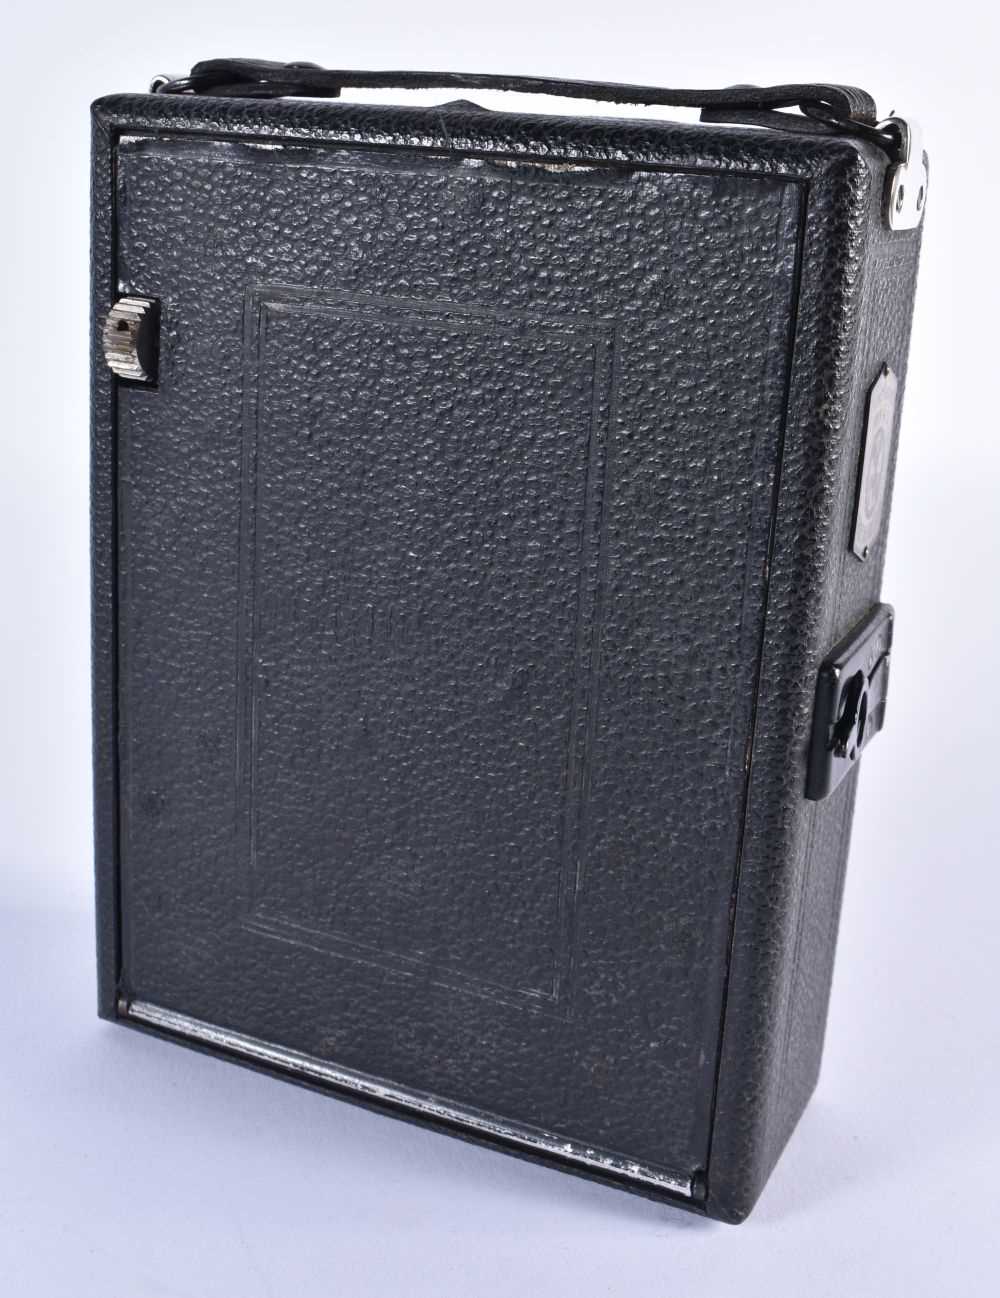 Thowe KW Klappkamera ANTIQUE CAMERA w/ Original Leather Case & Slides. 20 cm x 14 cm. - Image 4 of 5